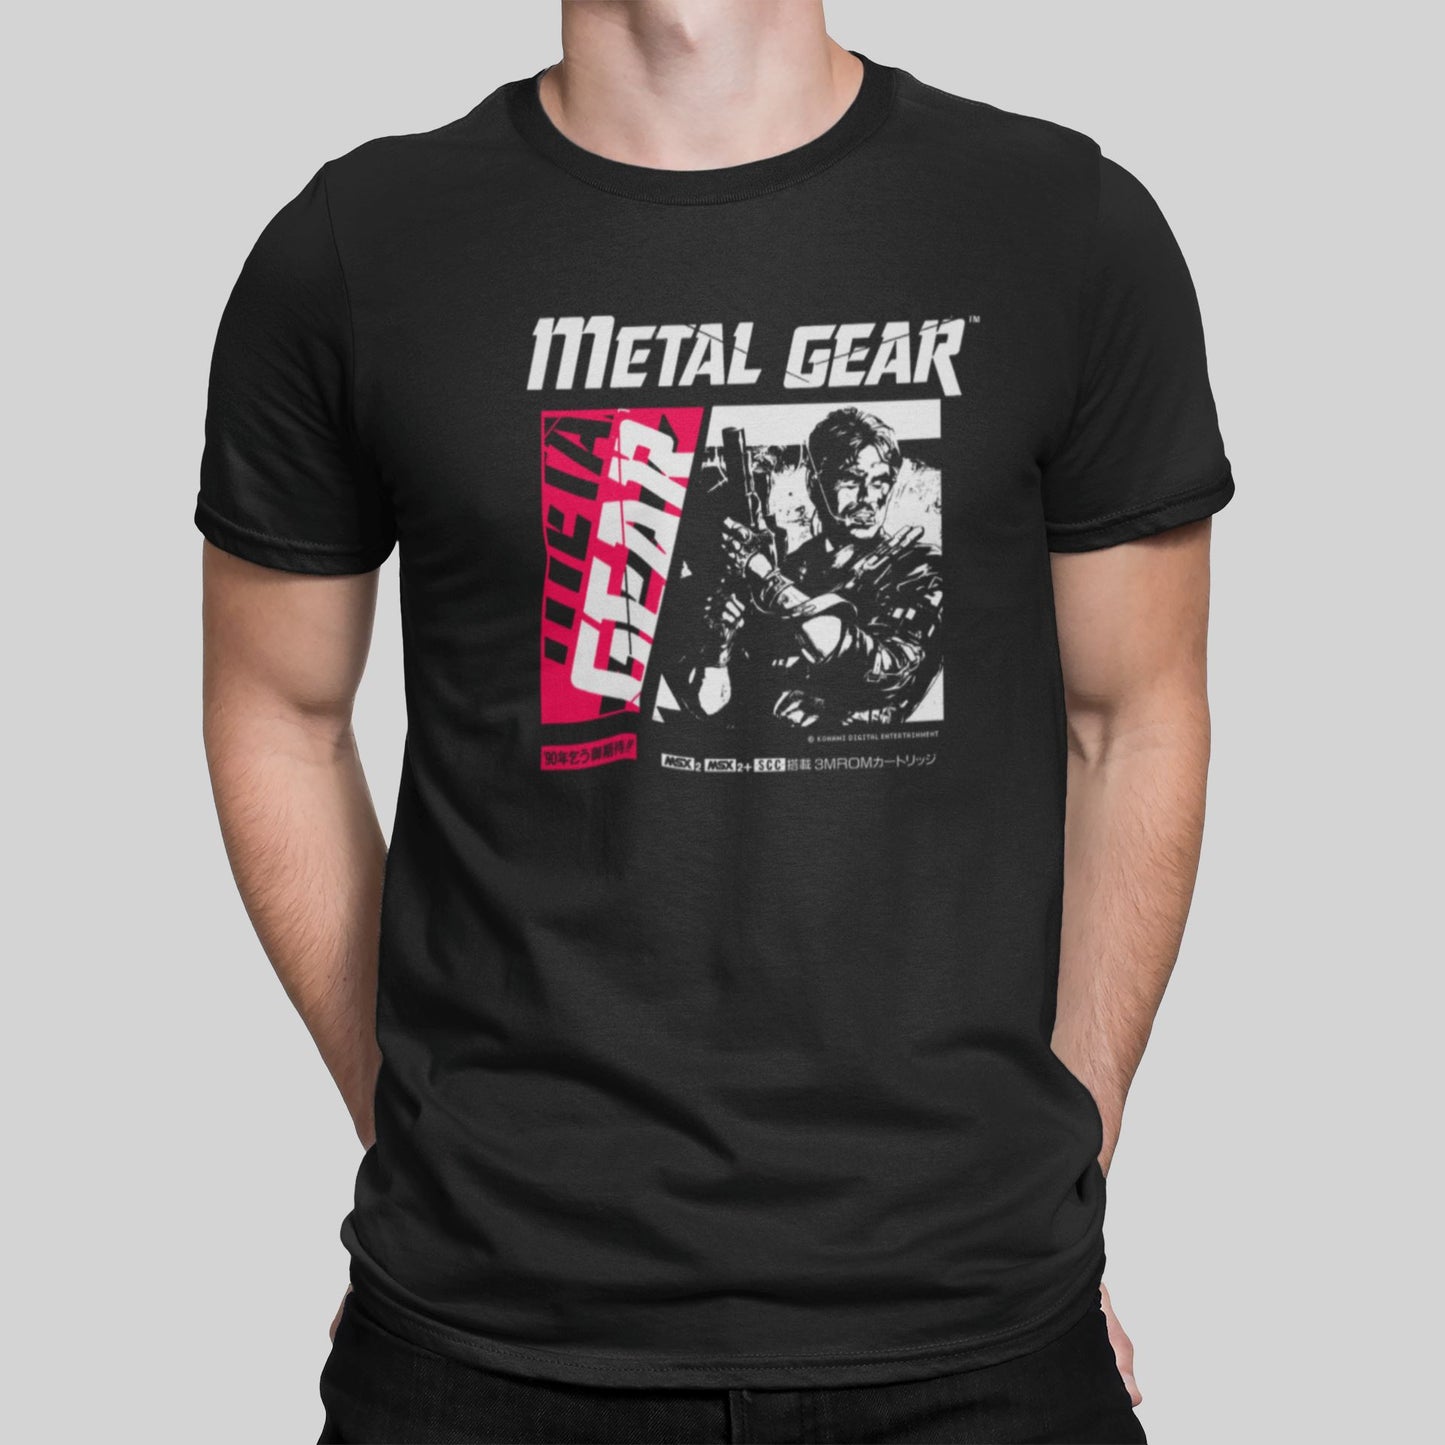 Metal Gear Retro Gaming T-Shirt T-Shirt Seven Squared Small 34-36" Black 